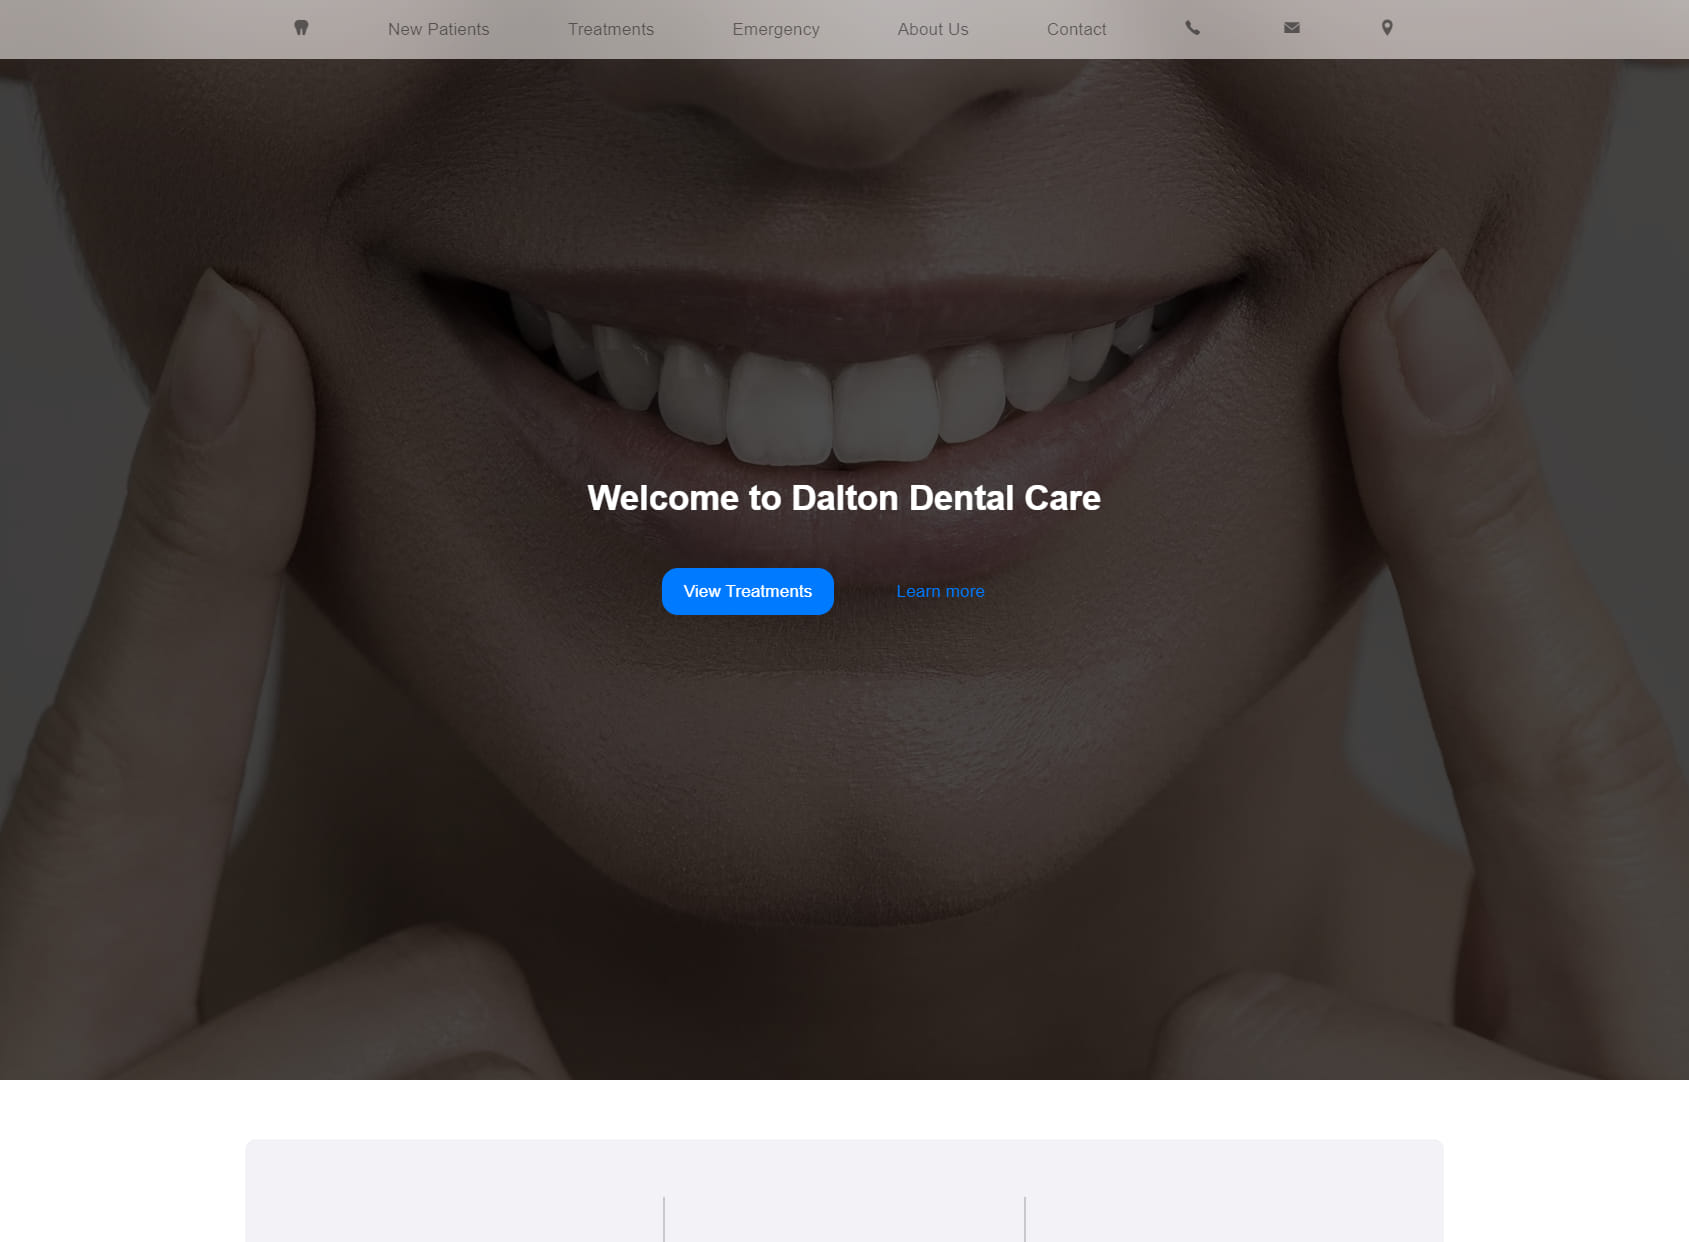 Dalton Dental Care